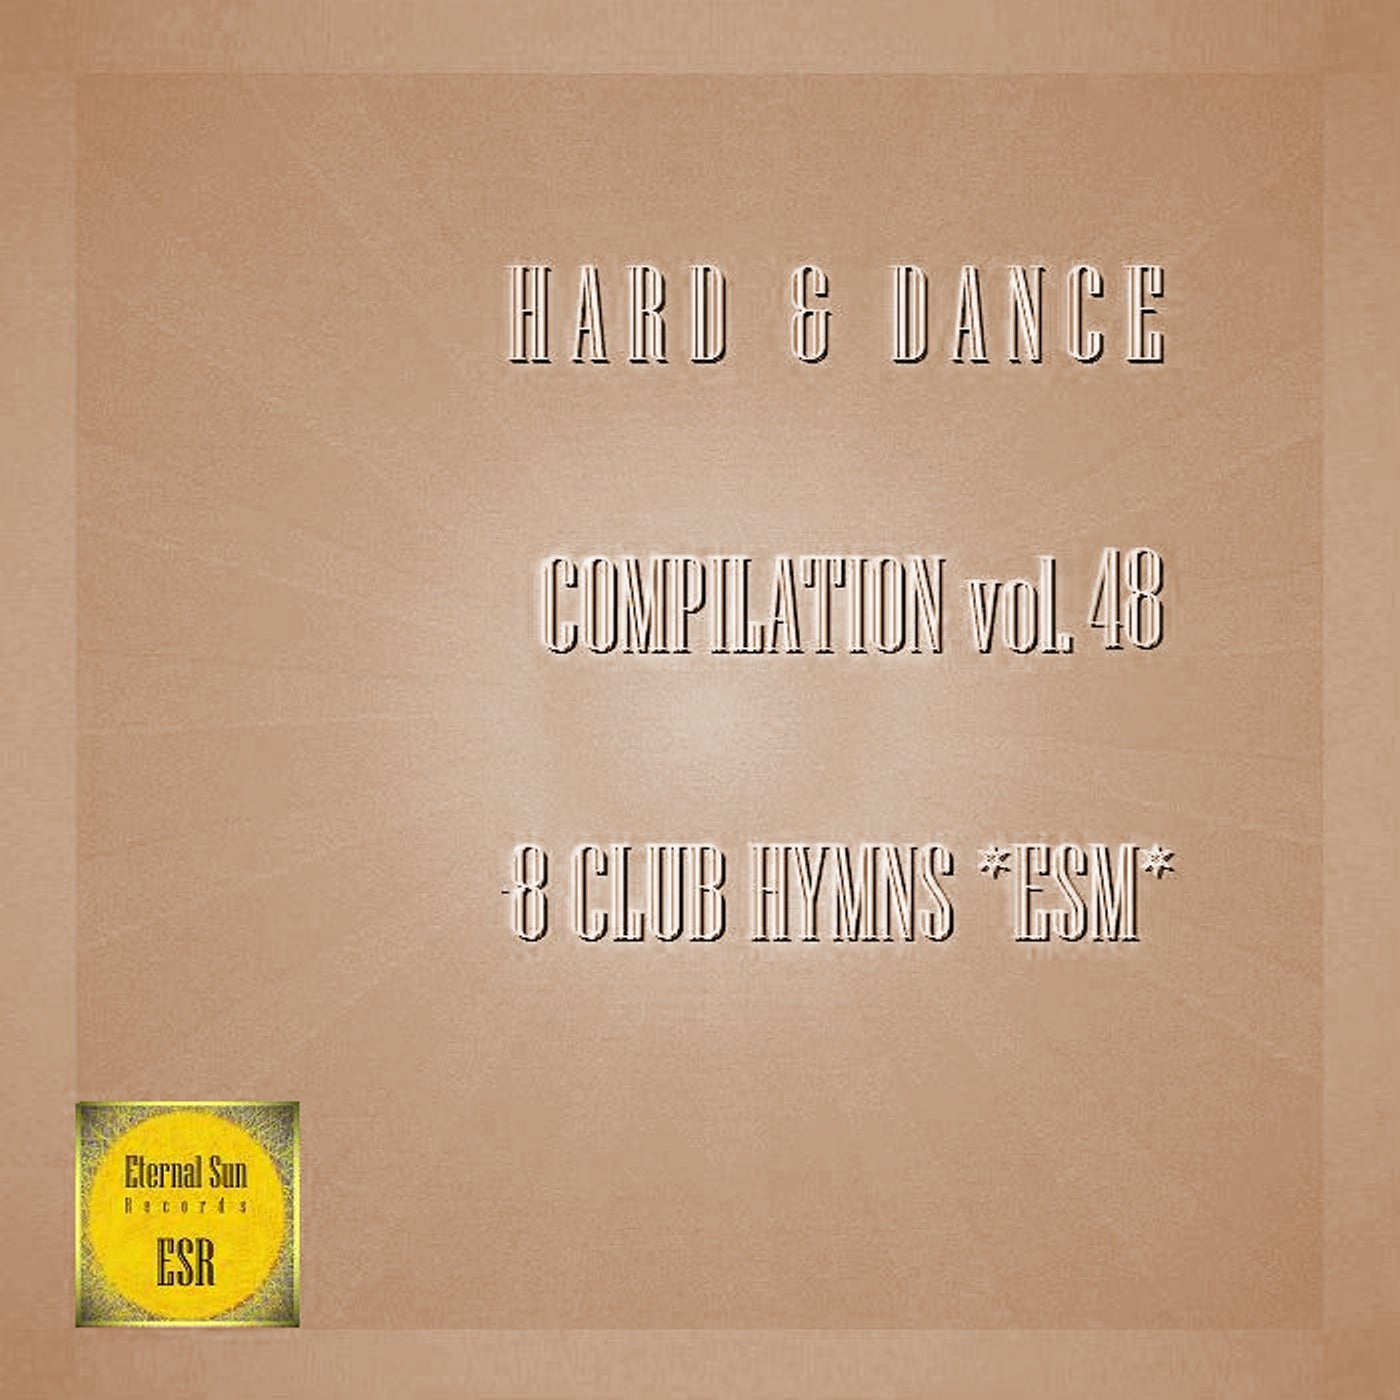 Hard & Dance Compilation vol. 48 - 8 Club Hymns ESM